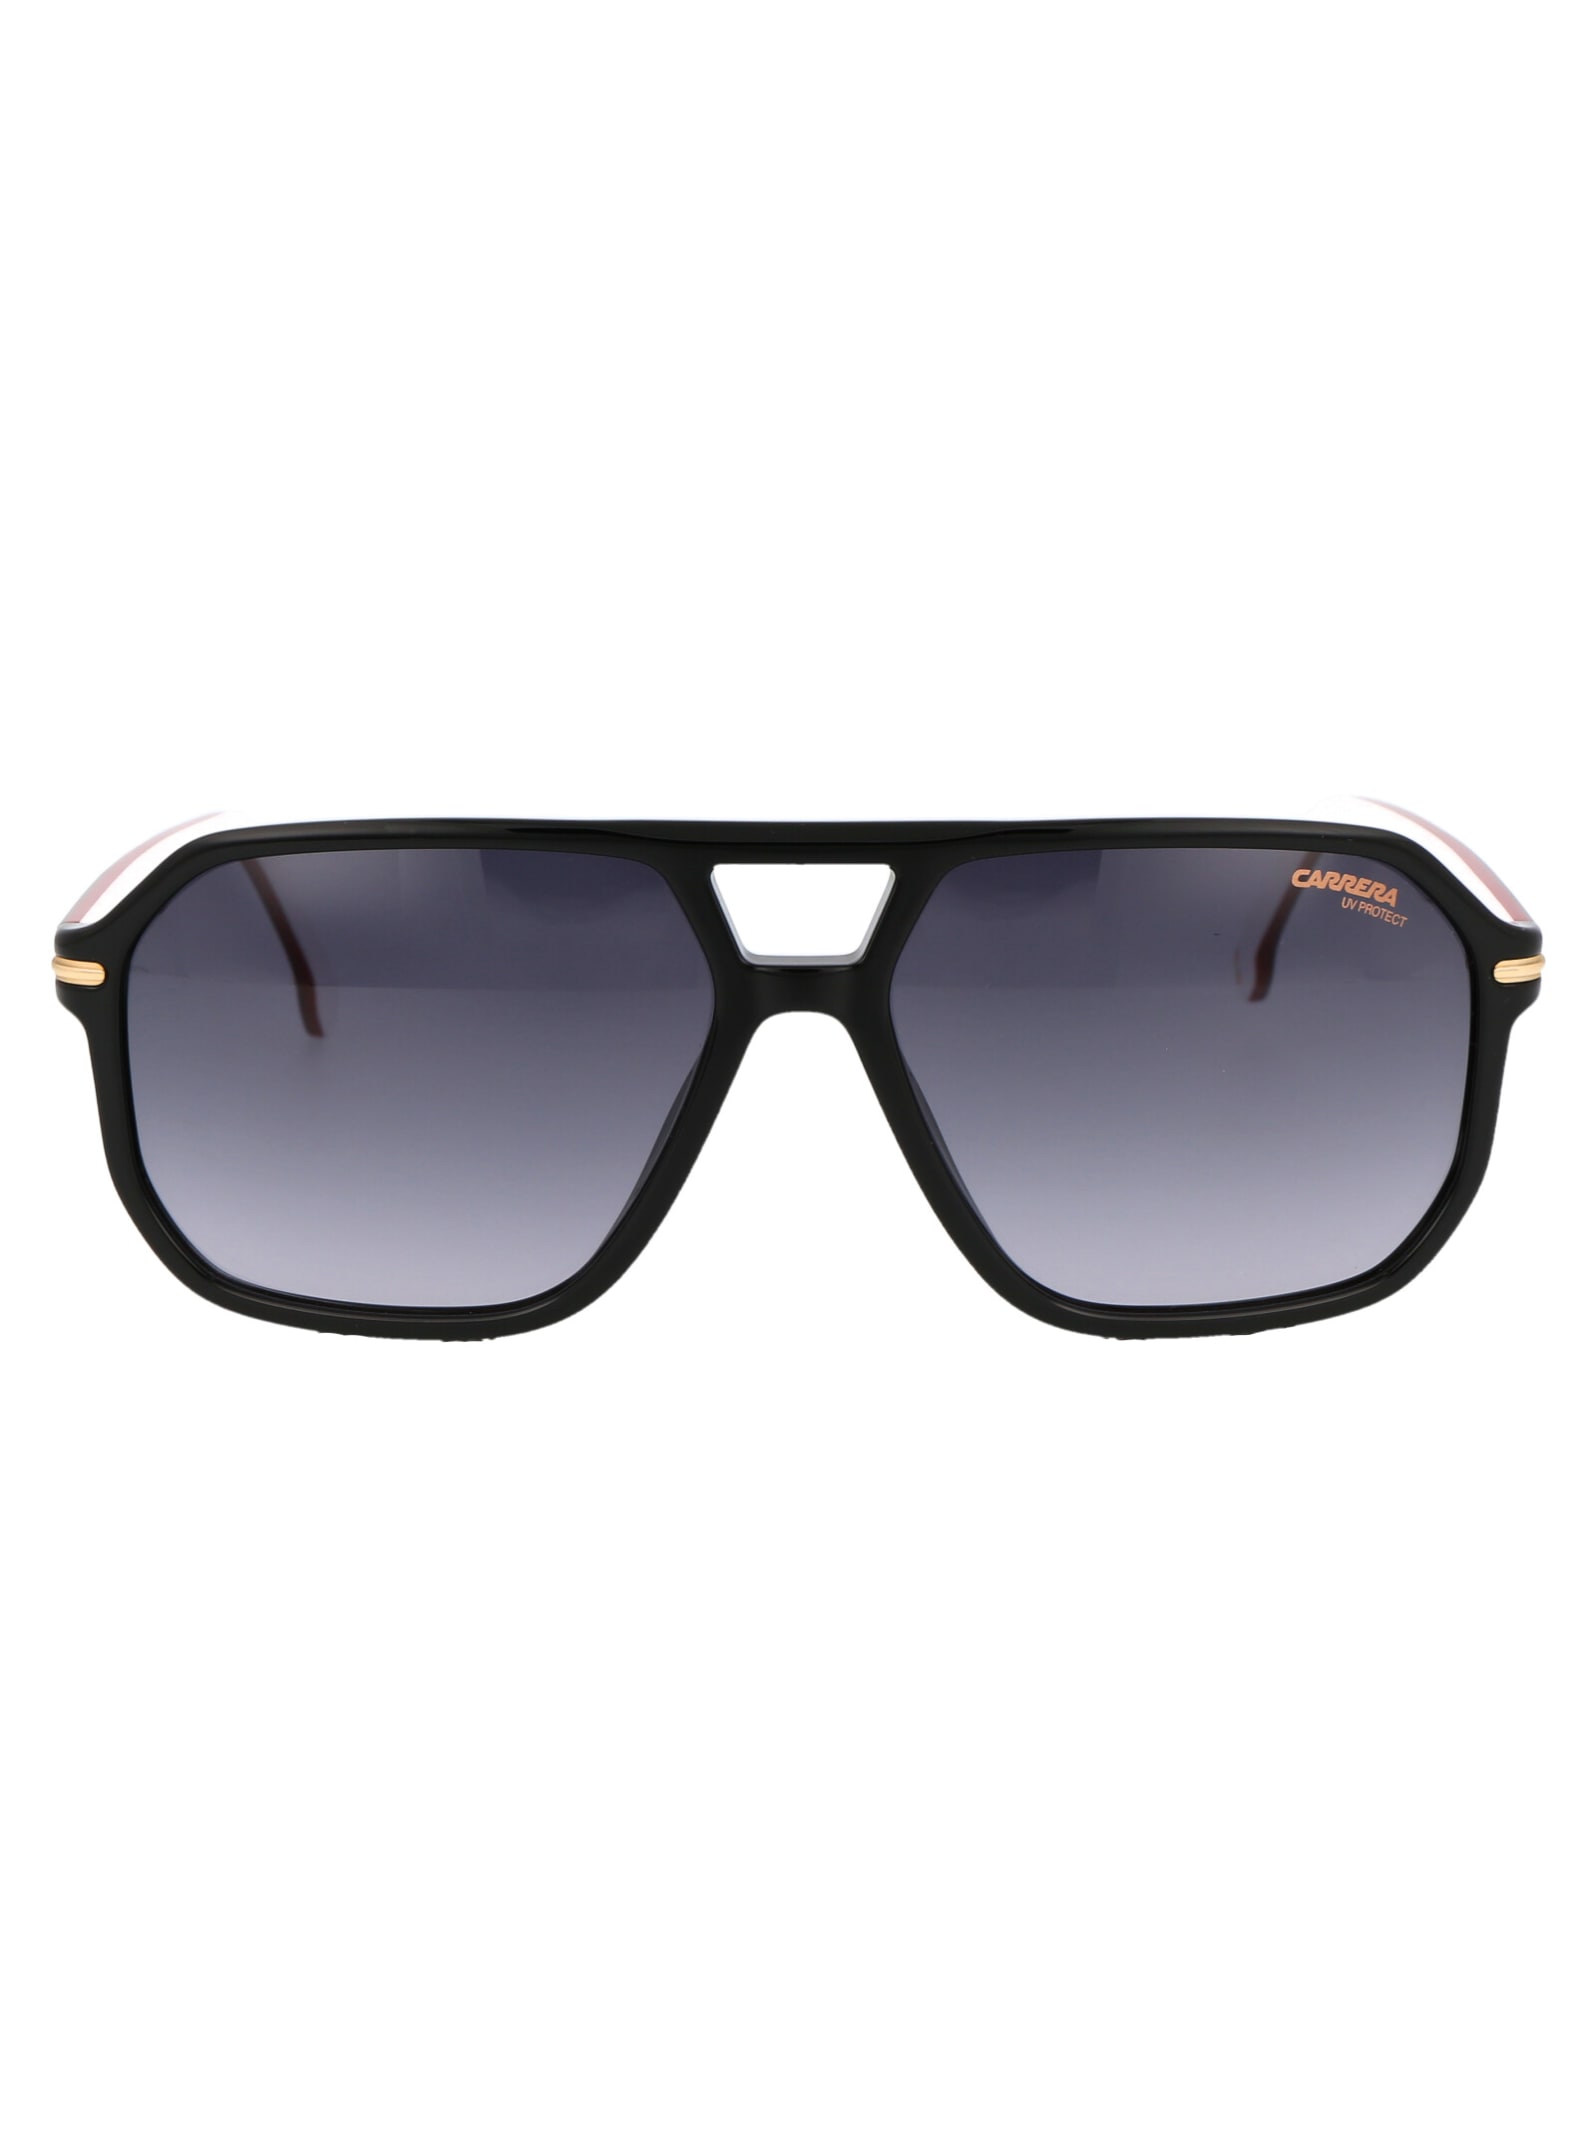 Carrera 302/s Sunglasses